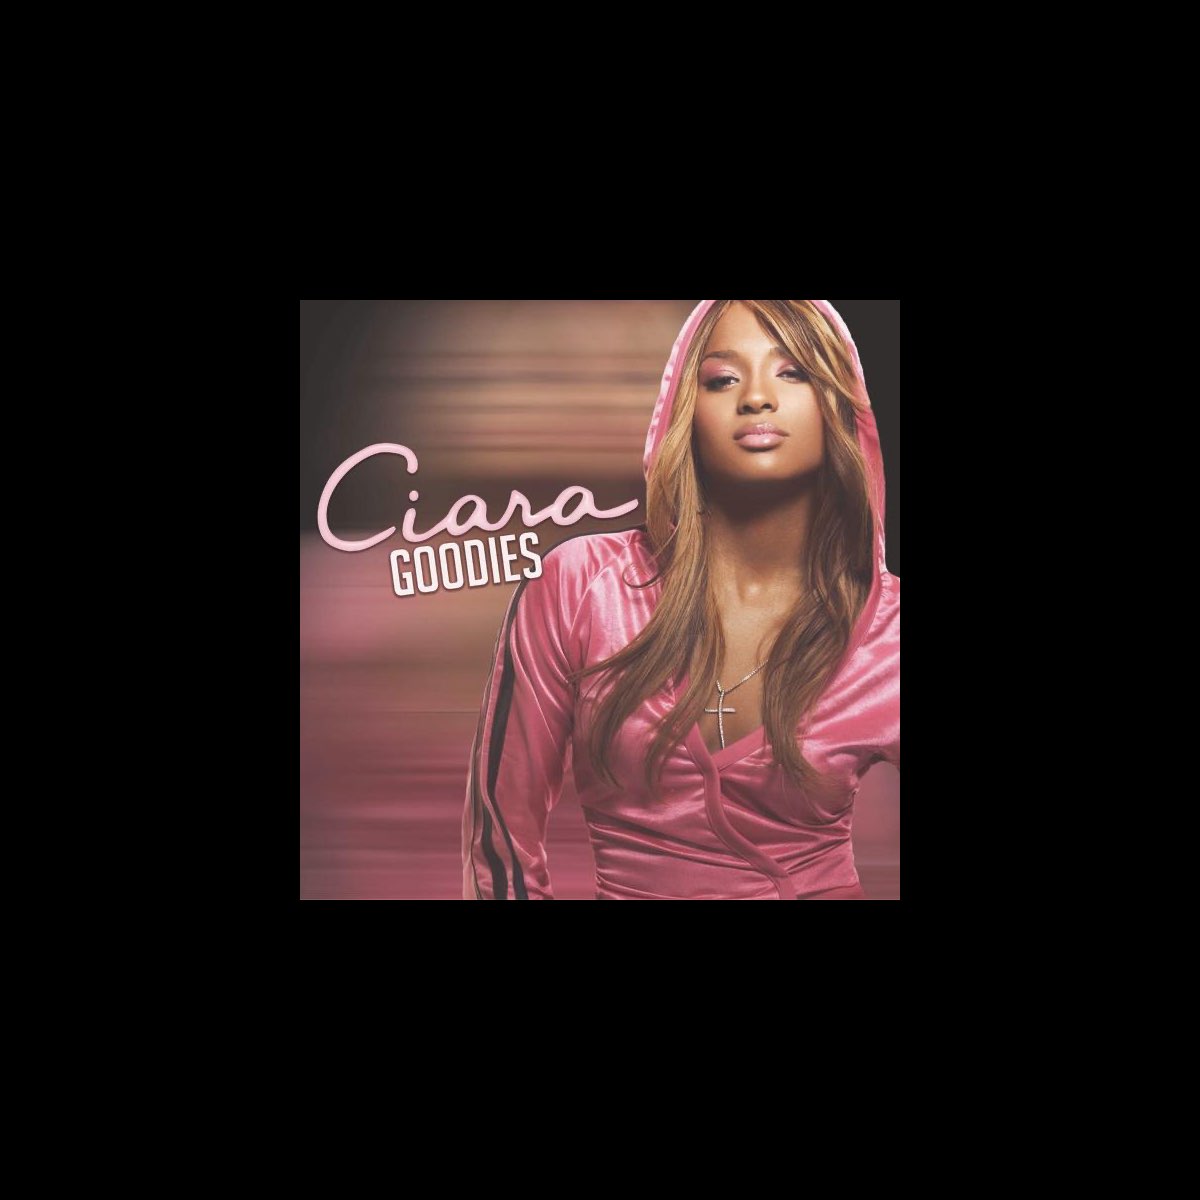 Goodies by Ciara on Apple Music